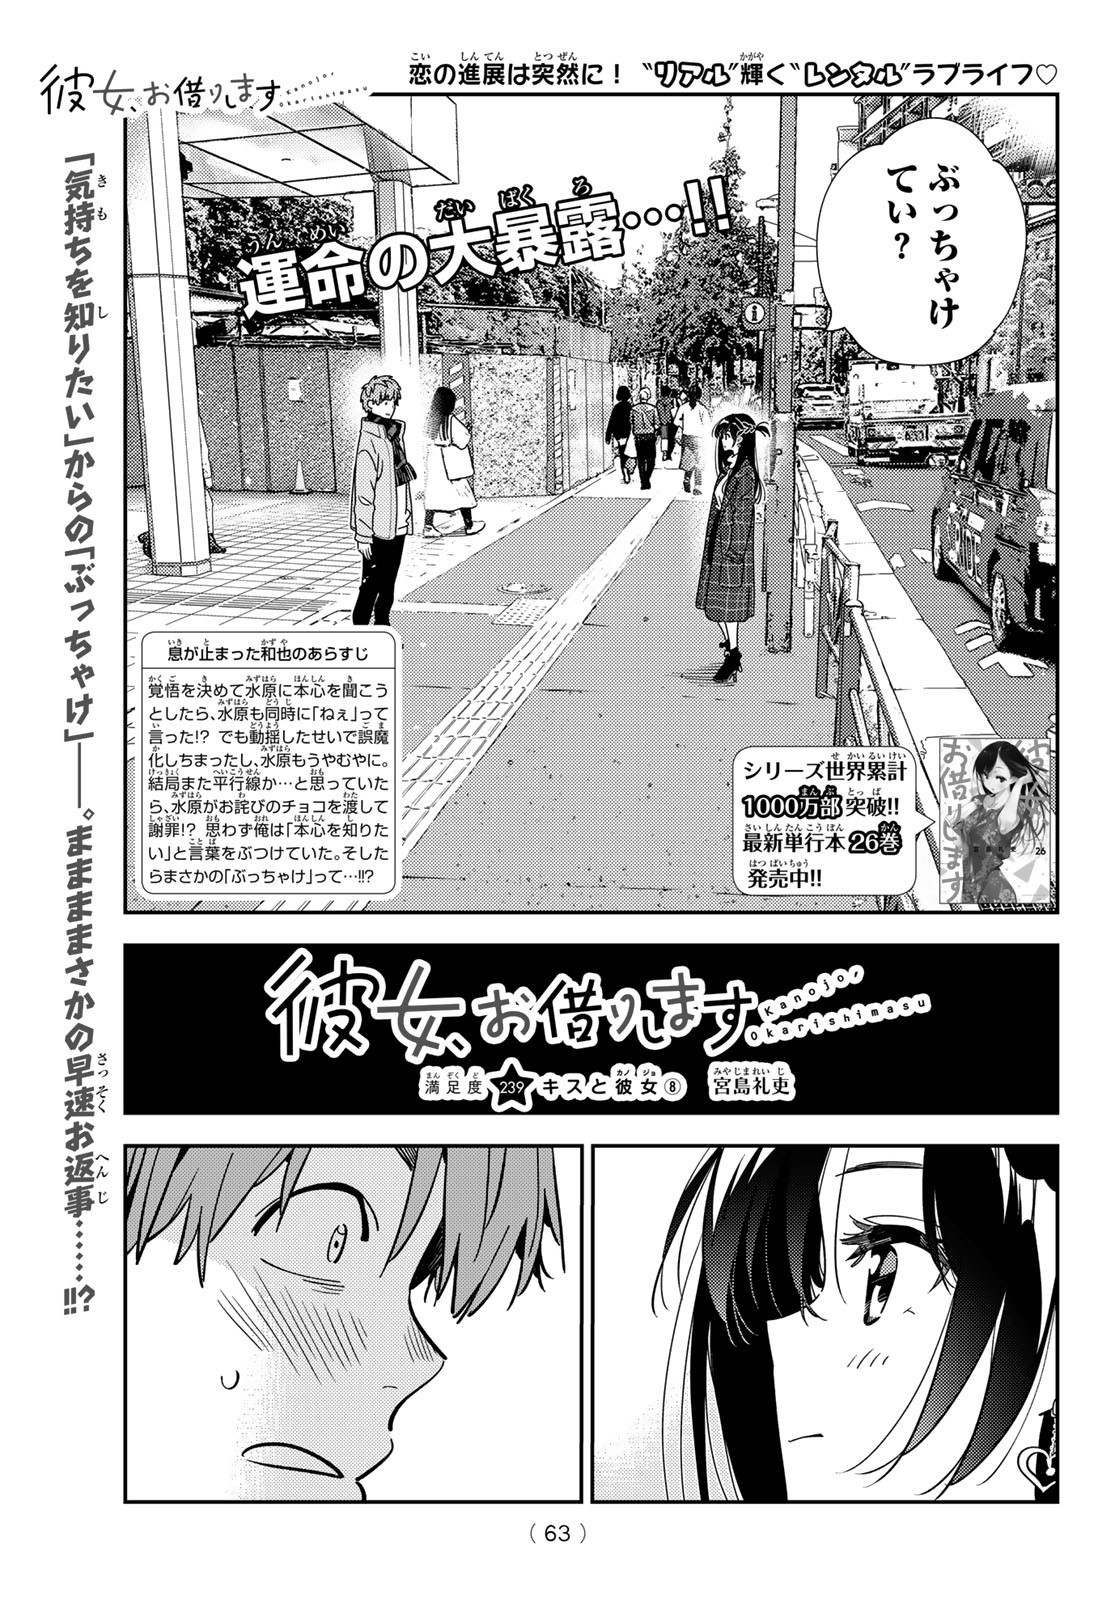 Kanojo, Okarishimasu - Chapter 239 - Page 1